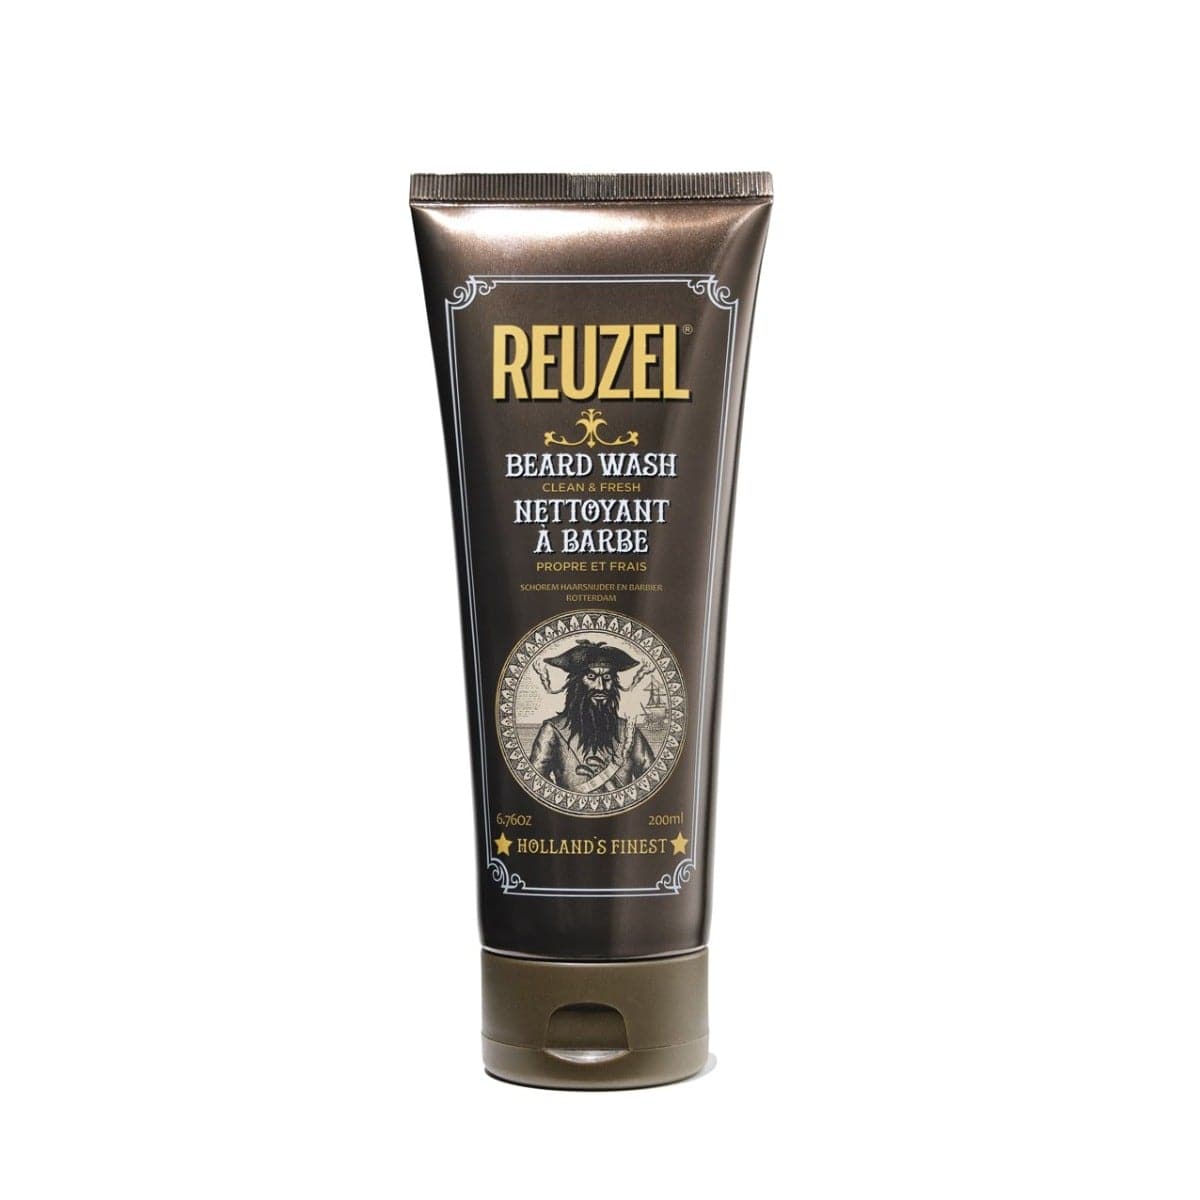 Reuzel Beard Wash 6.76 oz